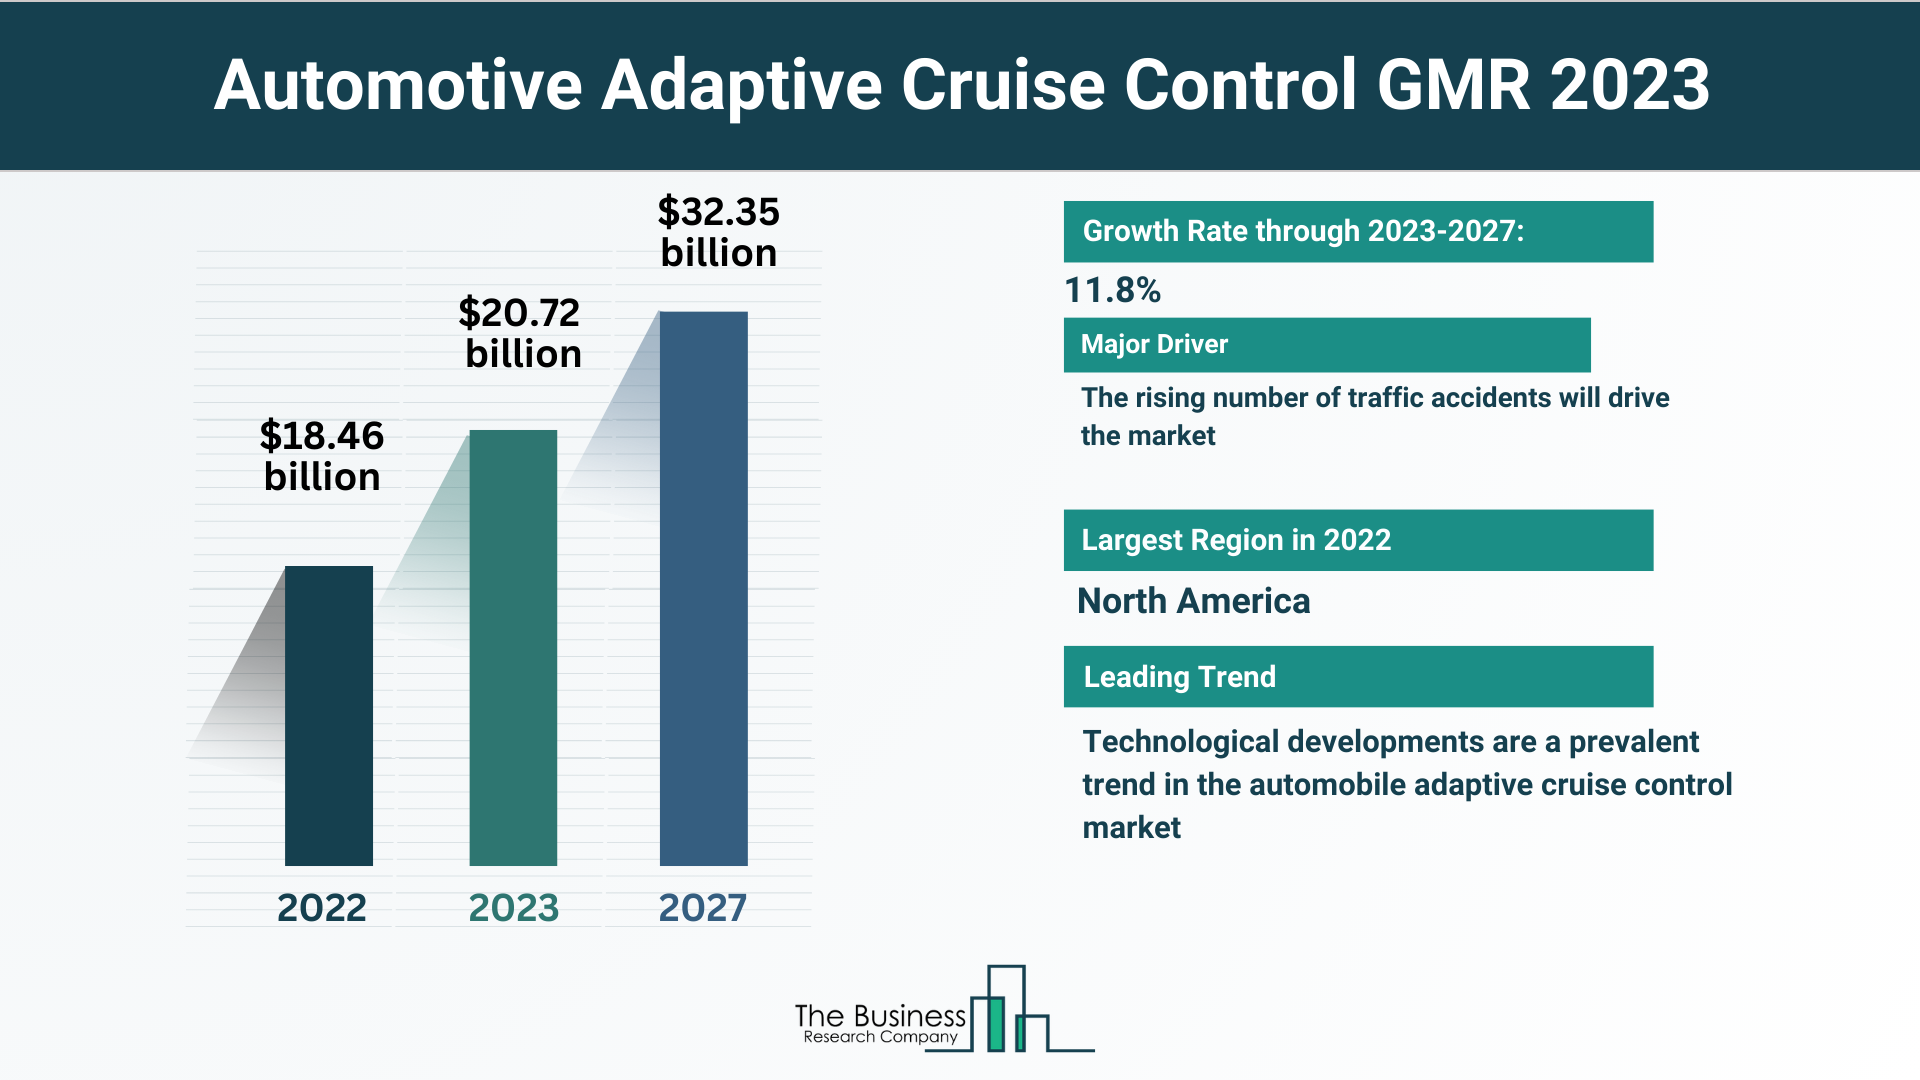 Global Automotive Adaptive Cruise Control Market